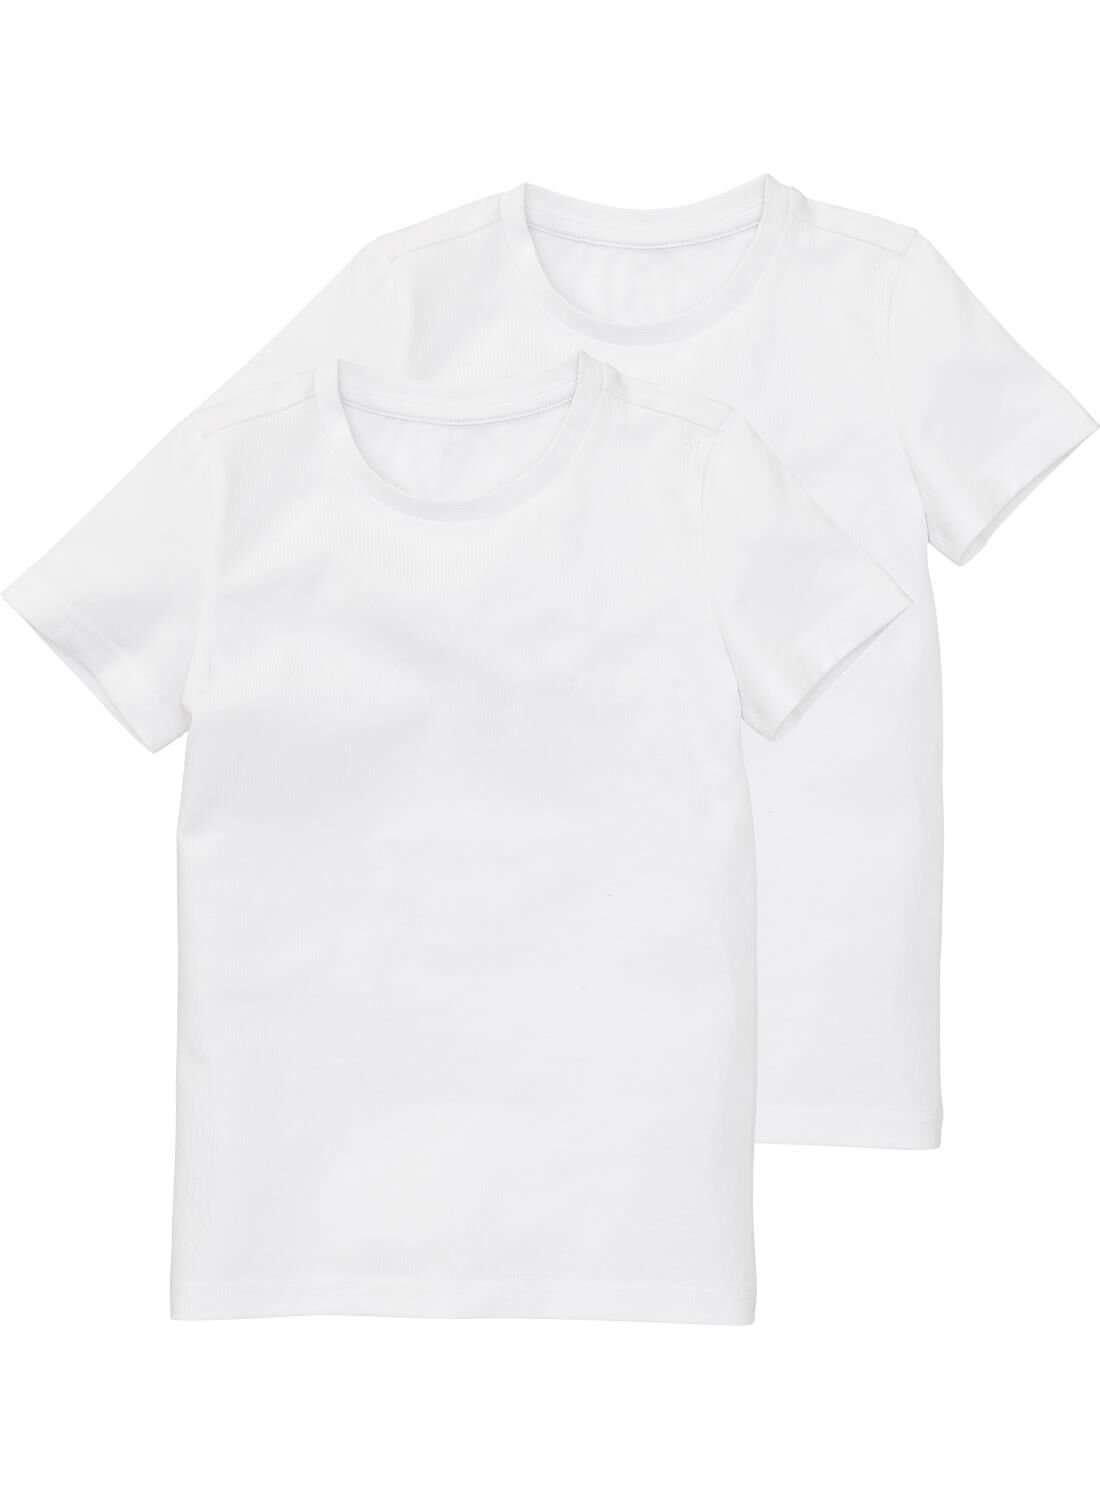 kans warmte Kaarsen Witte T Shirts Kinderen Greece, SAVE 36% - lutheranems.com